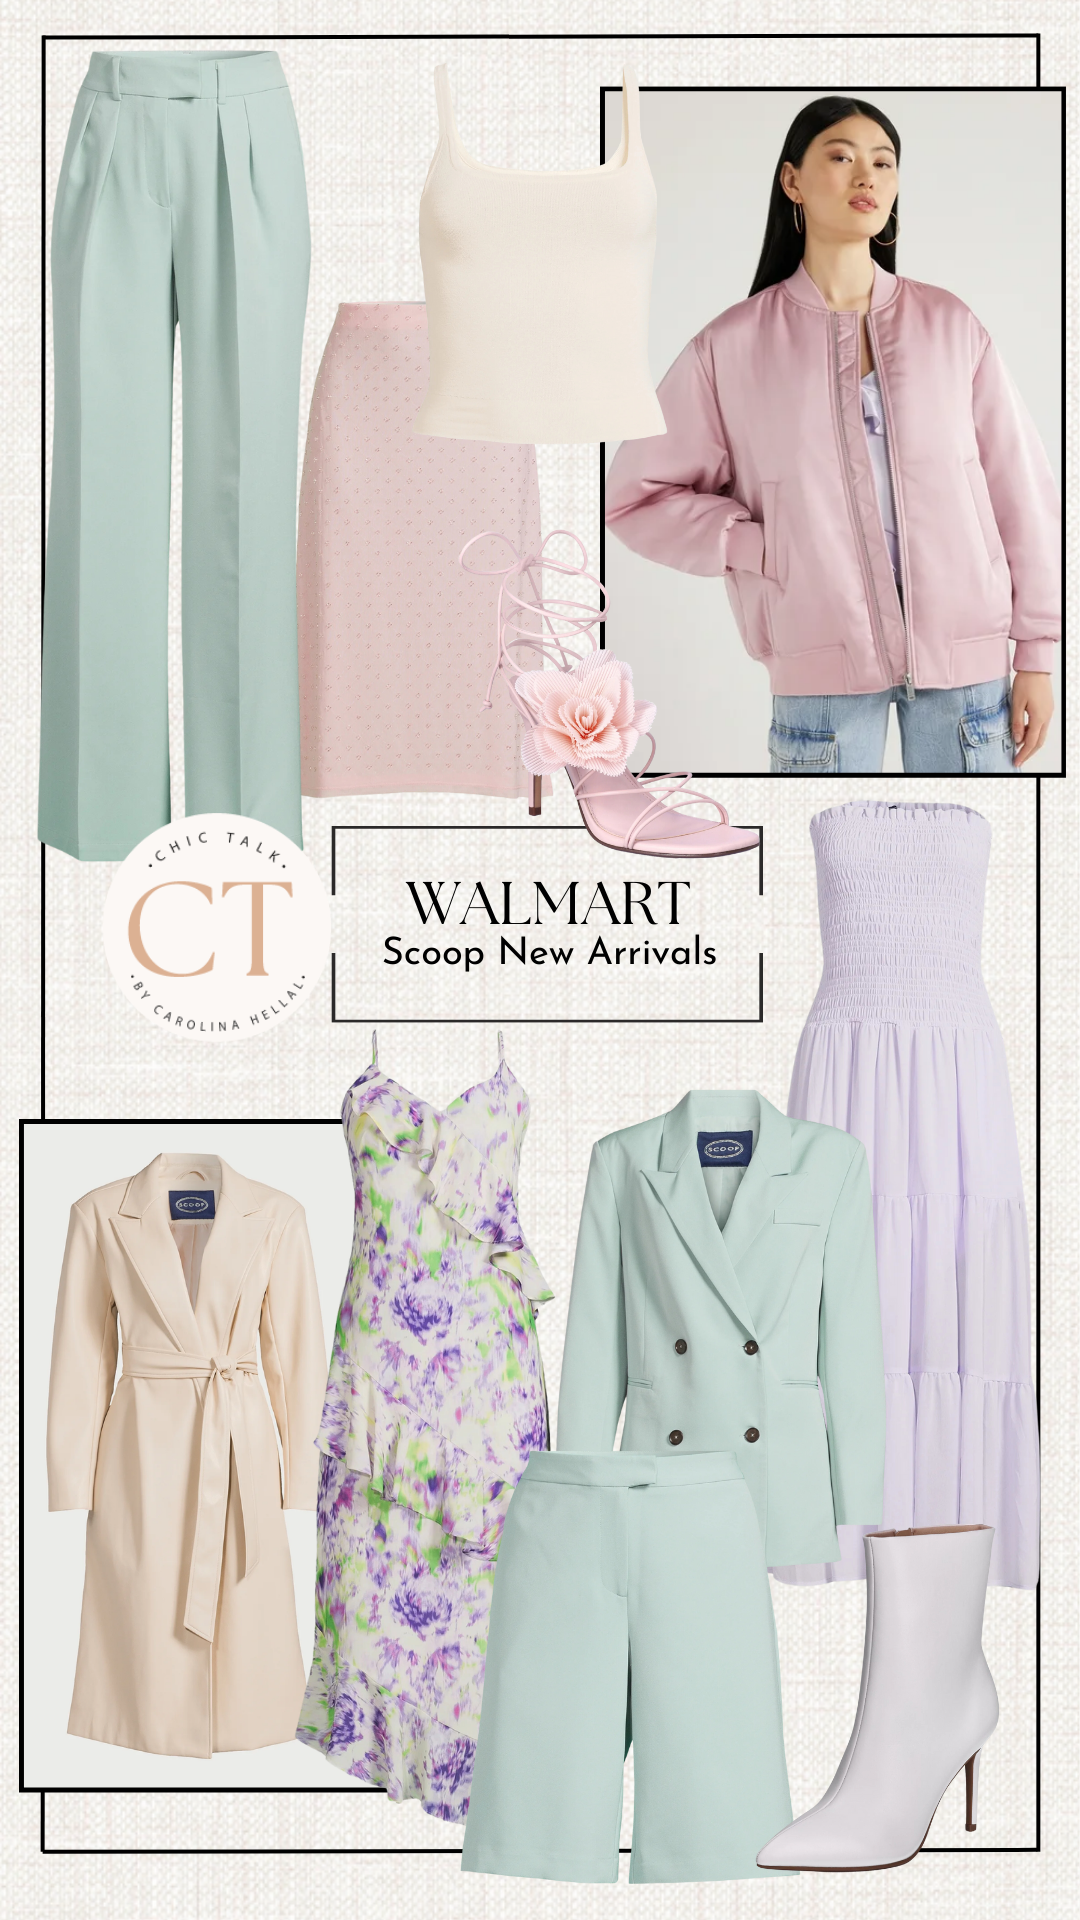 Walmart fashion spring new arrivals via Scoop - CHIC TALK 